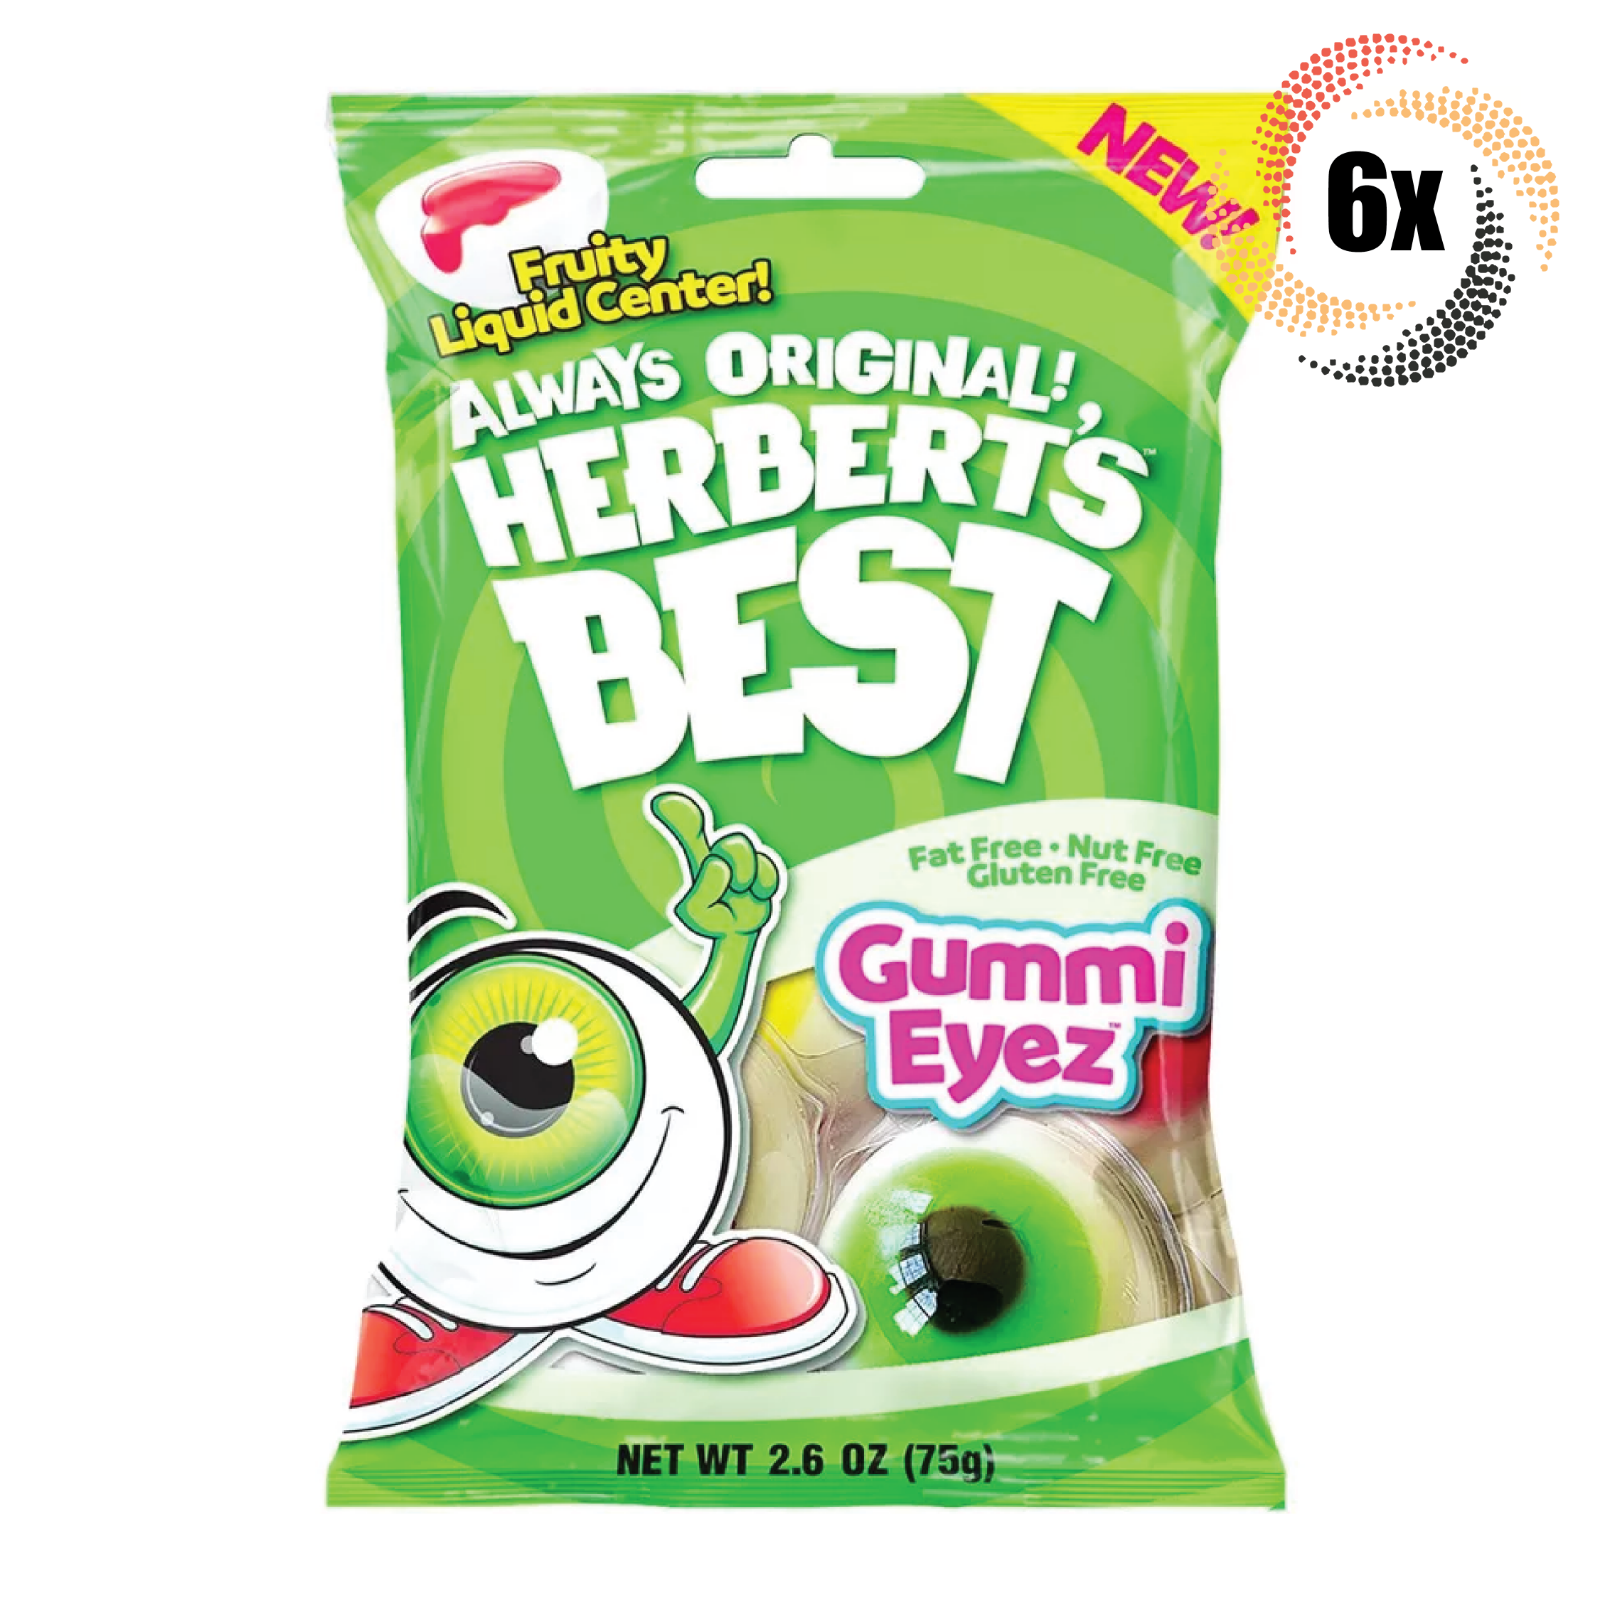 Primary image for 6x Bags Herbert's Best Gummi Eyez Fruity Liquid Center Gummy Candy | 2.6oz